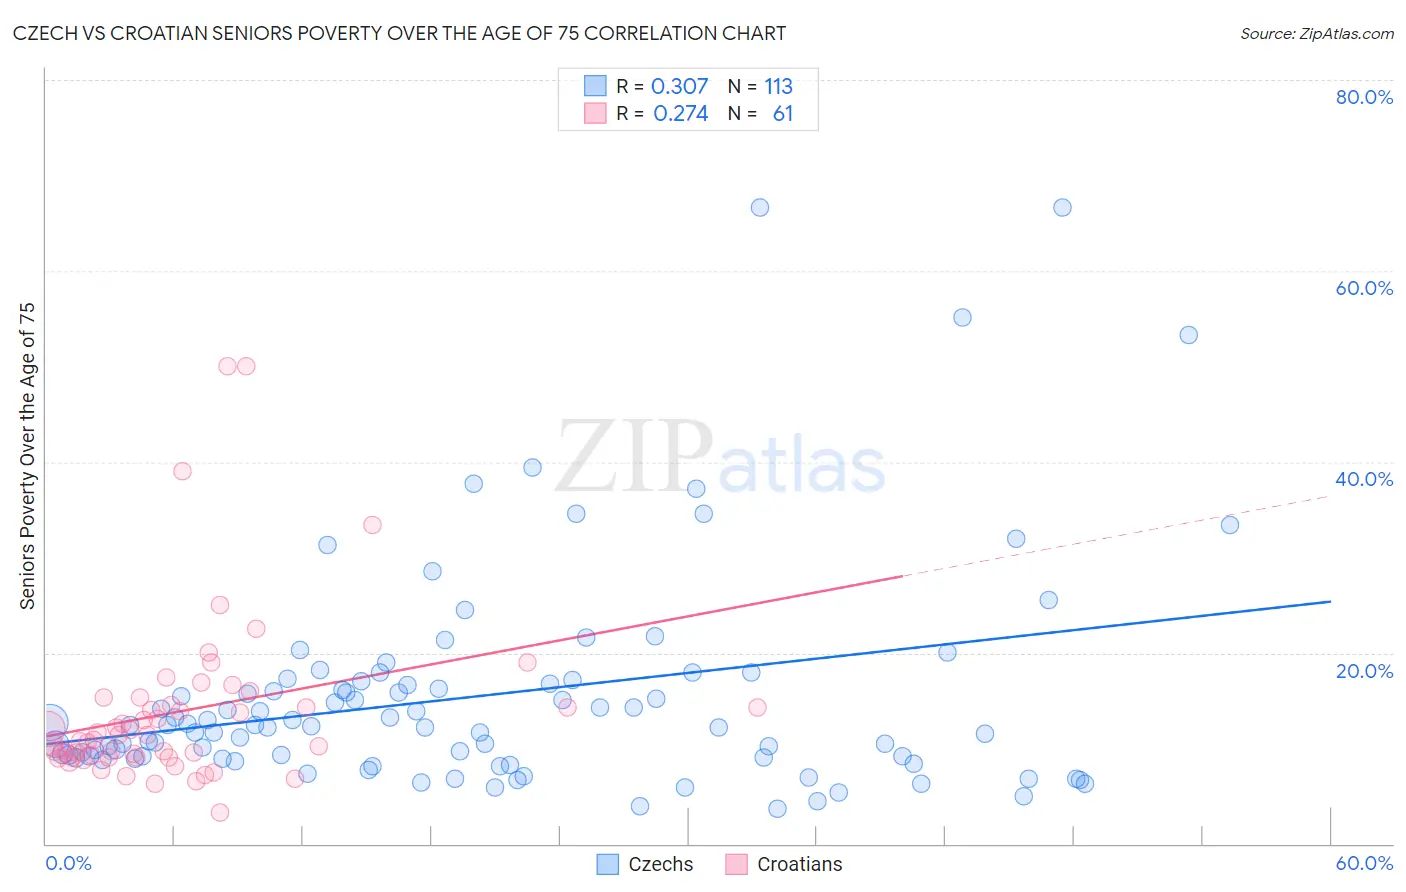 Czech vs Croatian Seniors Poverty Over the Age of 75